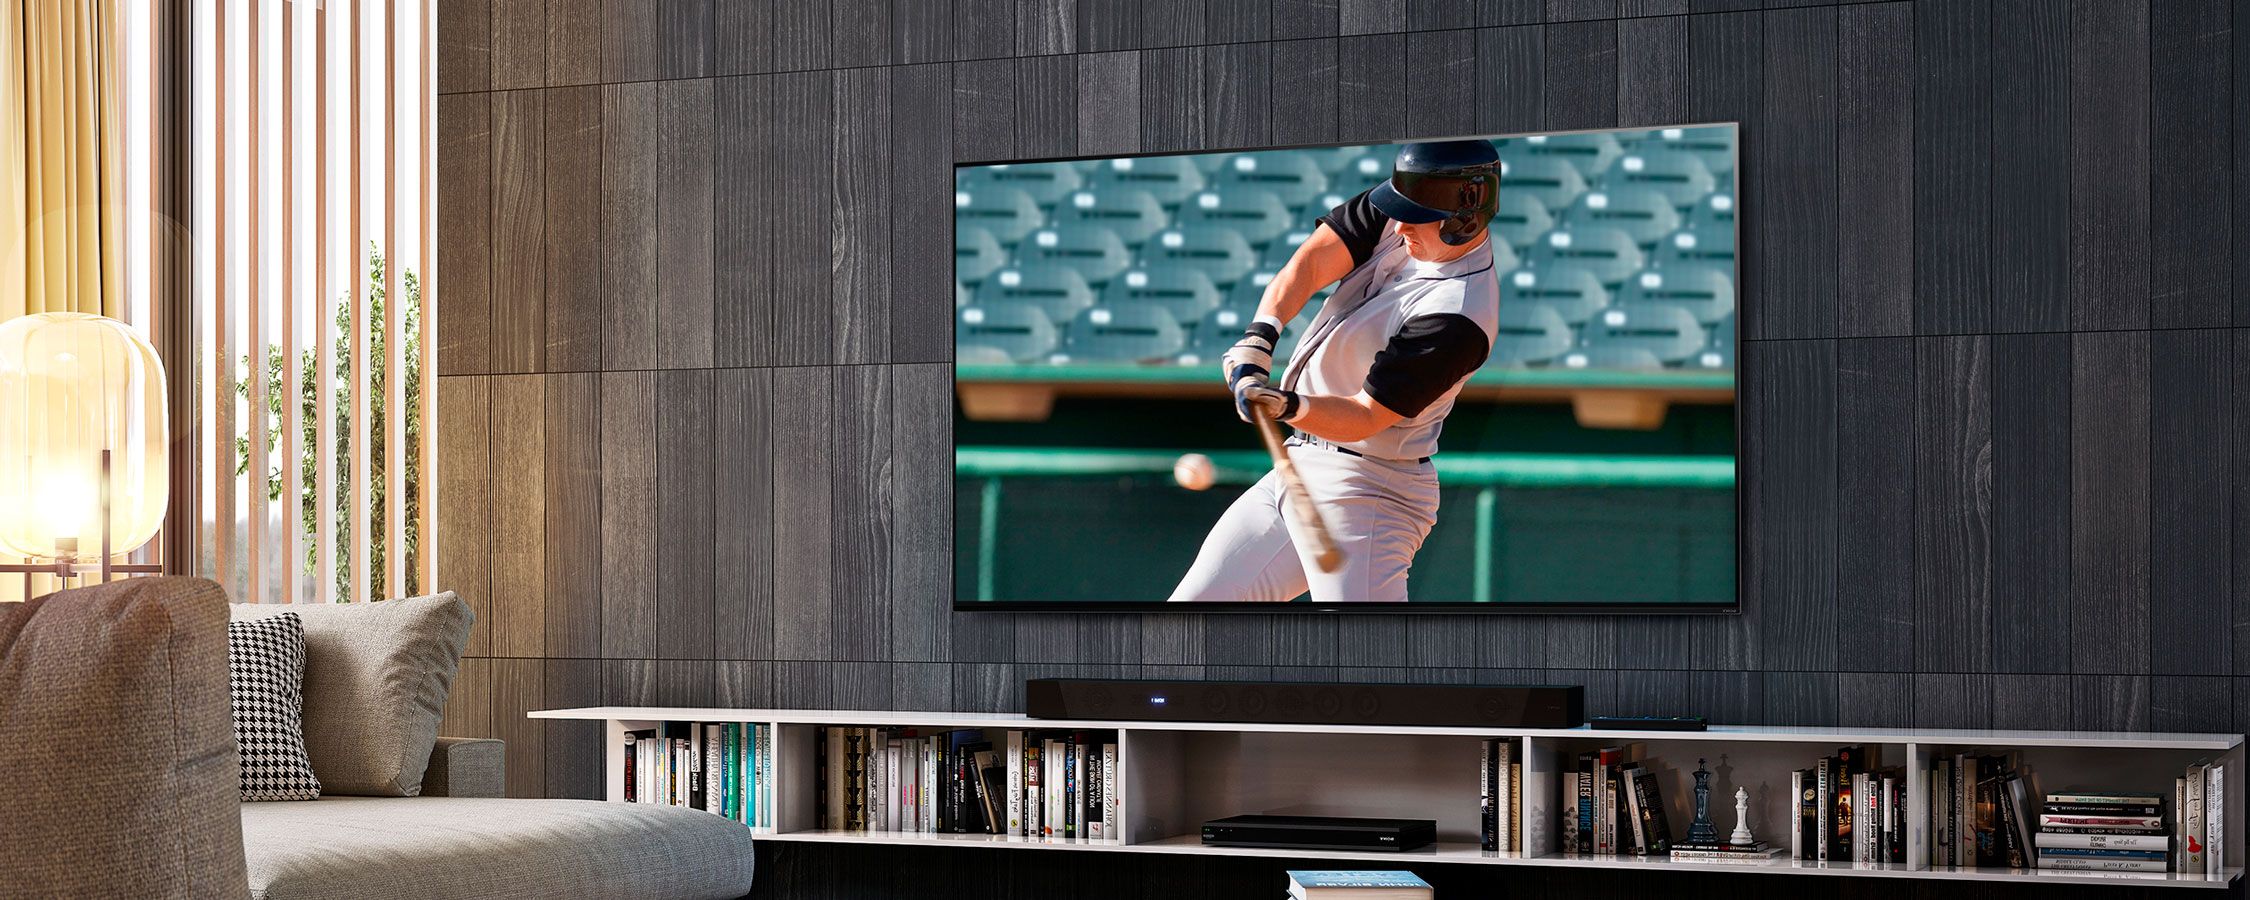 Sony image of man hitting baseball with baseball bat